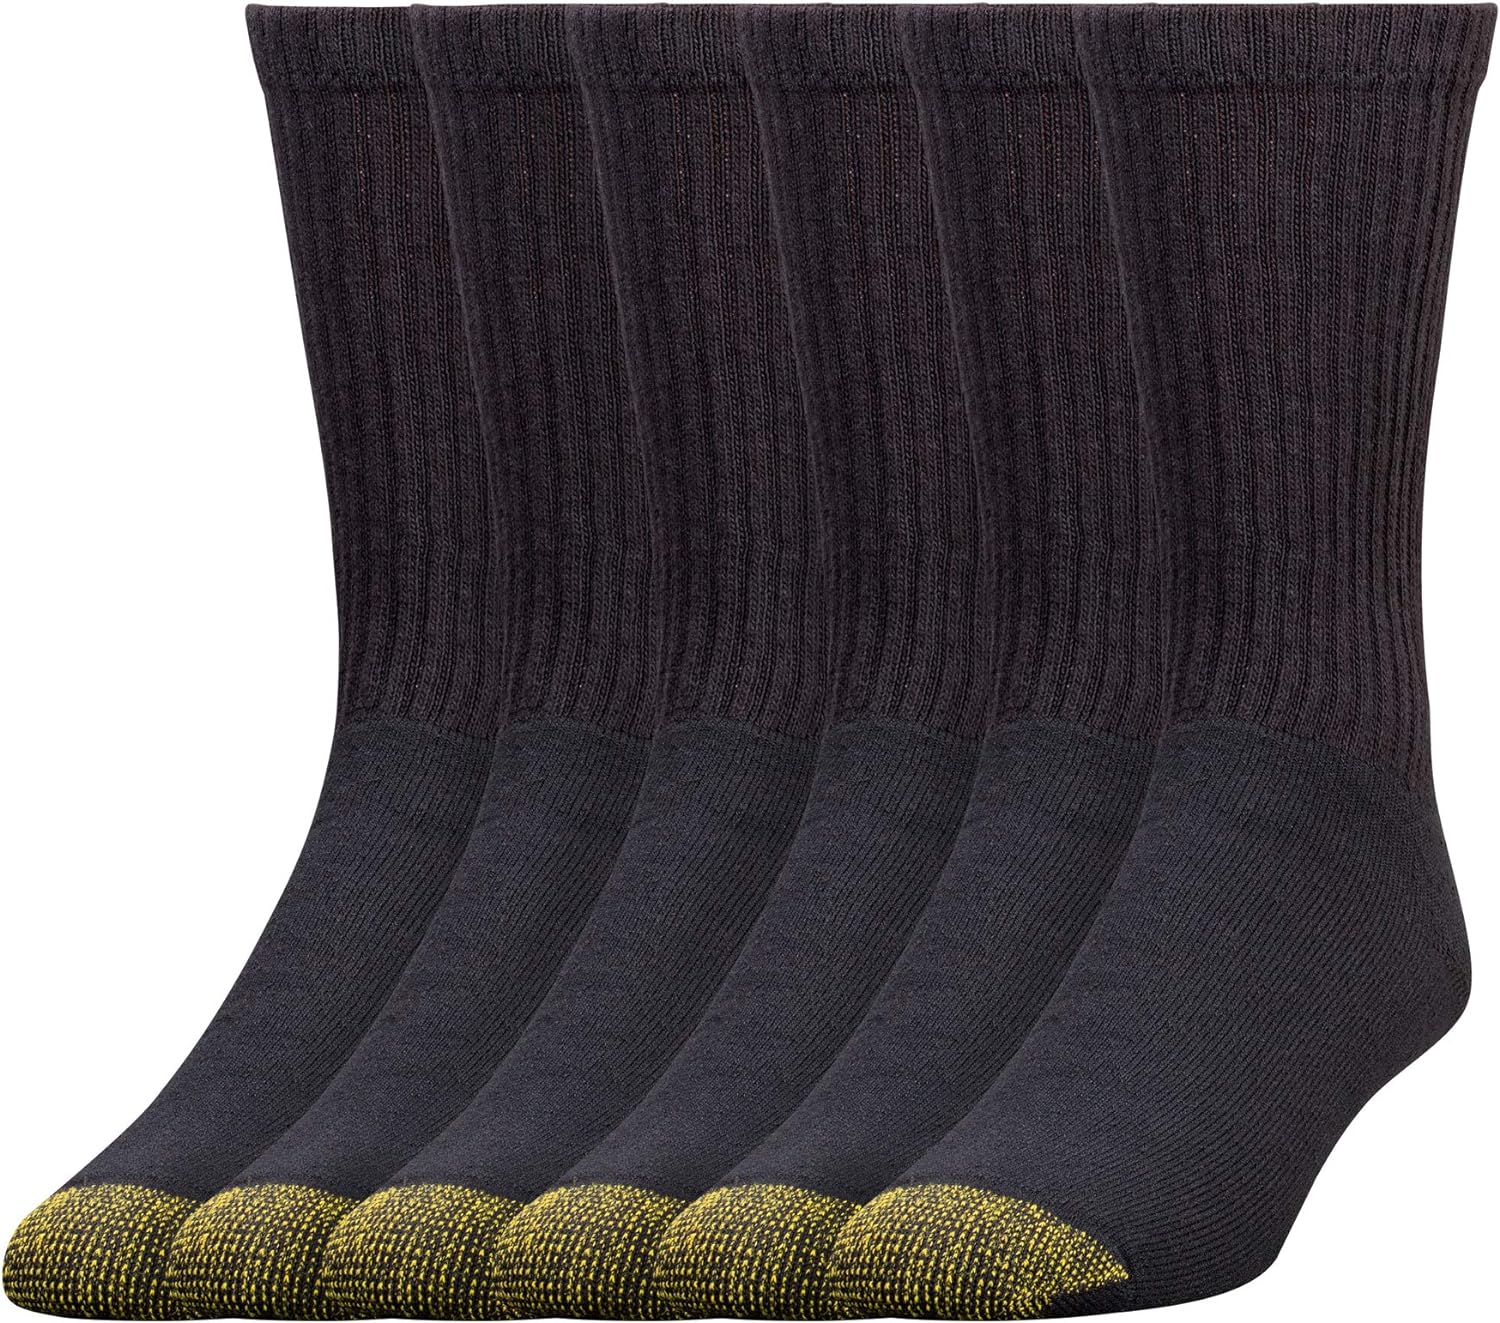 GOLDTOE Men's 656S Cotton Crew Athletic Socks, Multipairs - $12.32 Amazon